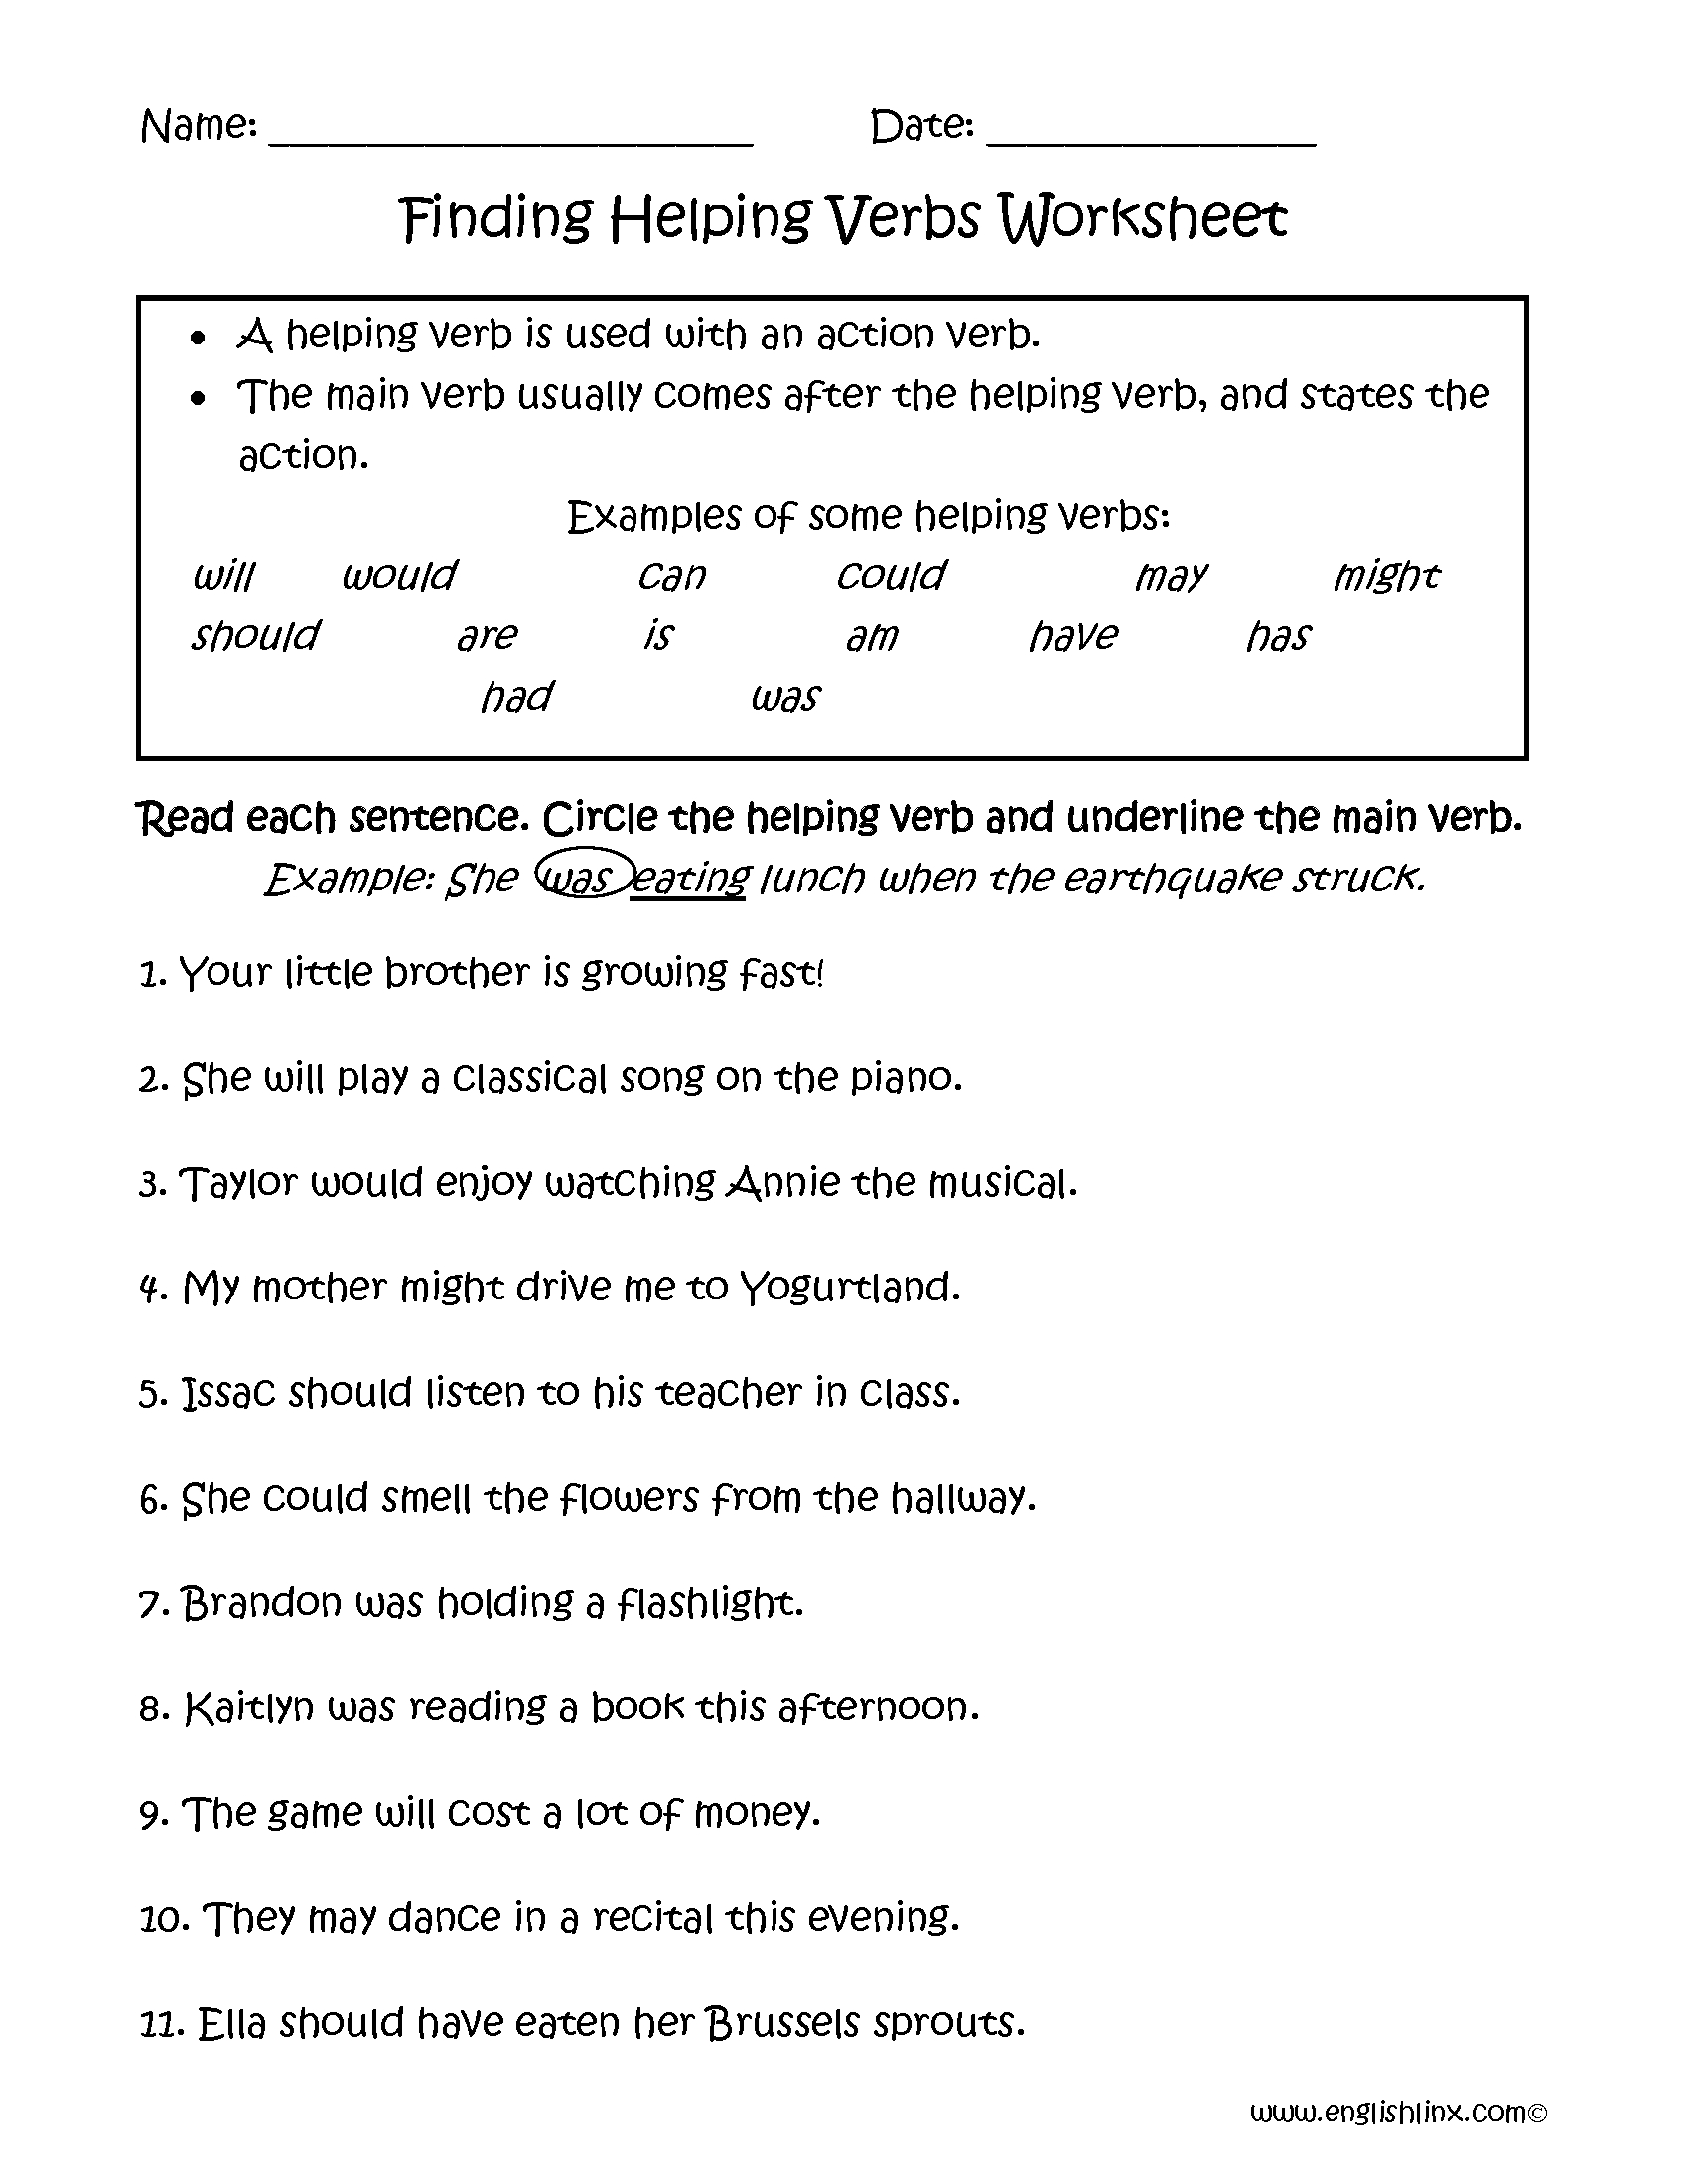 verb-worksheets-2nd-grade-db-excel